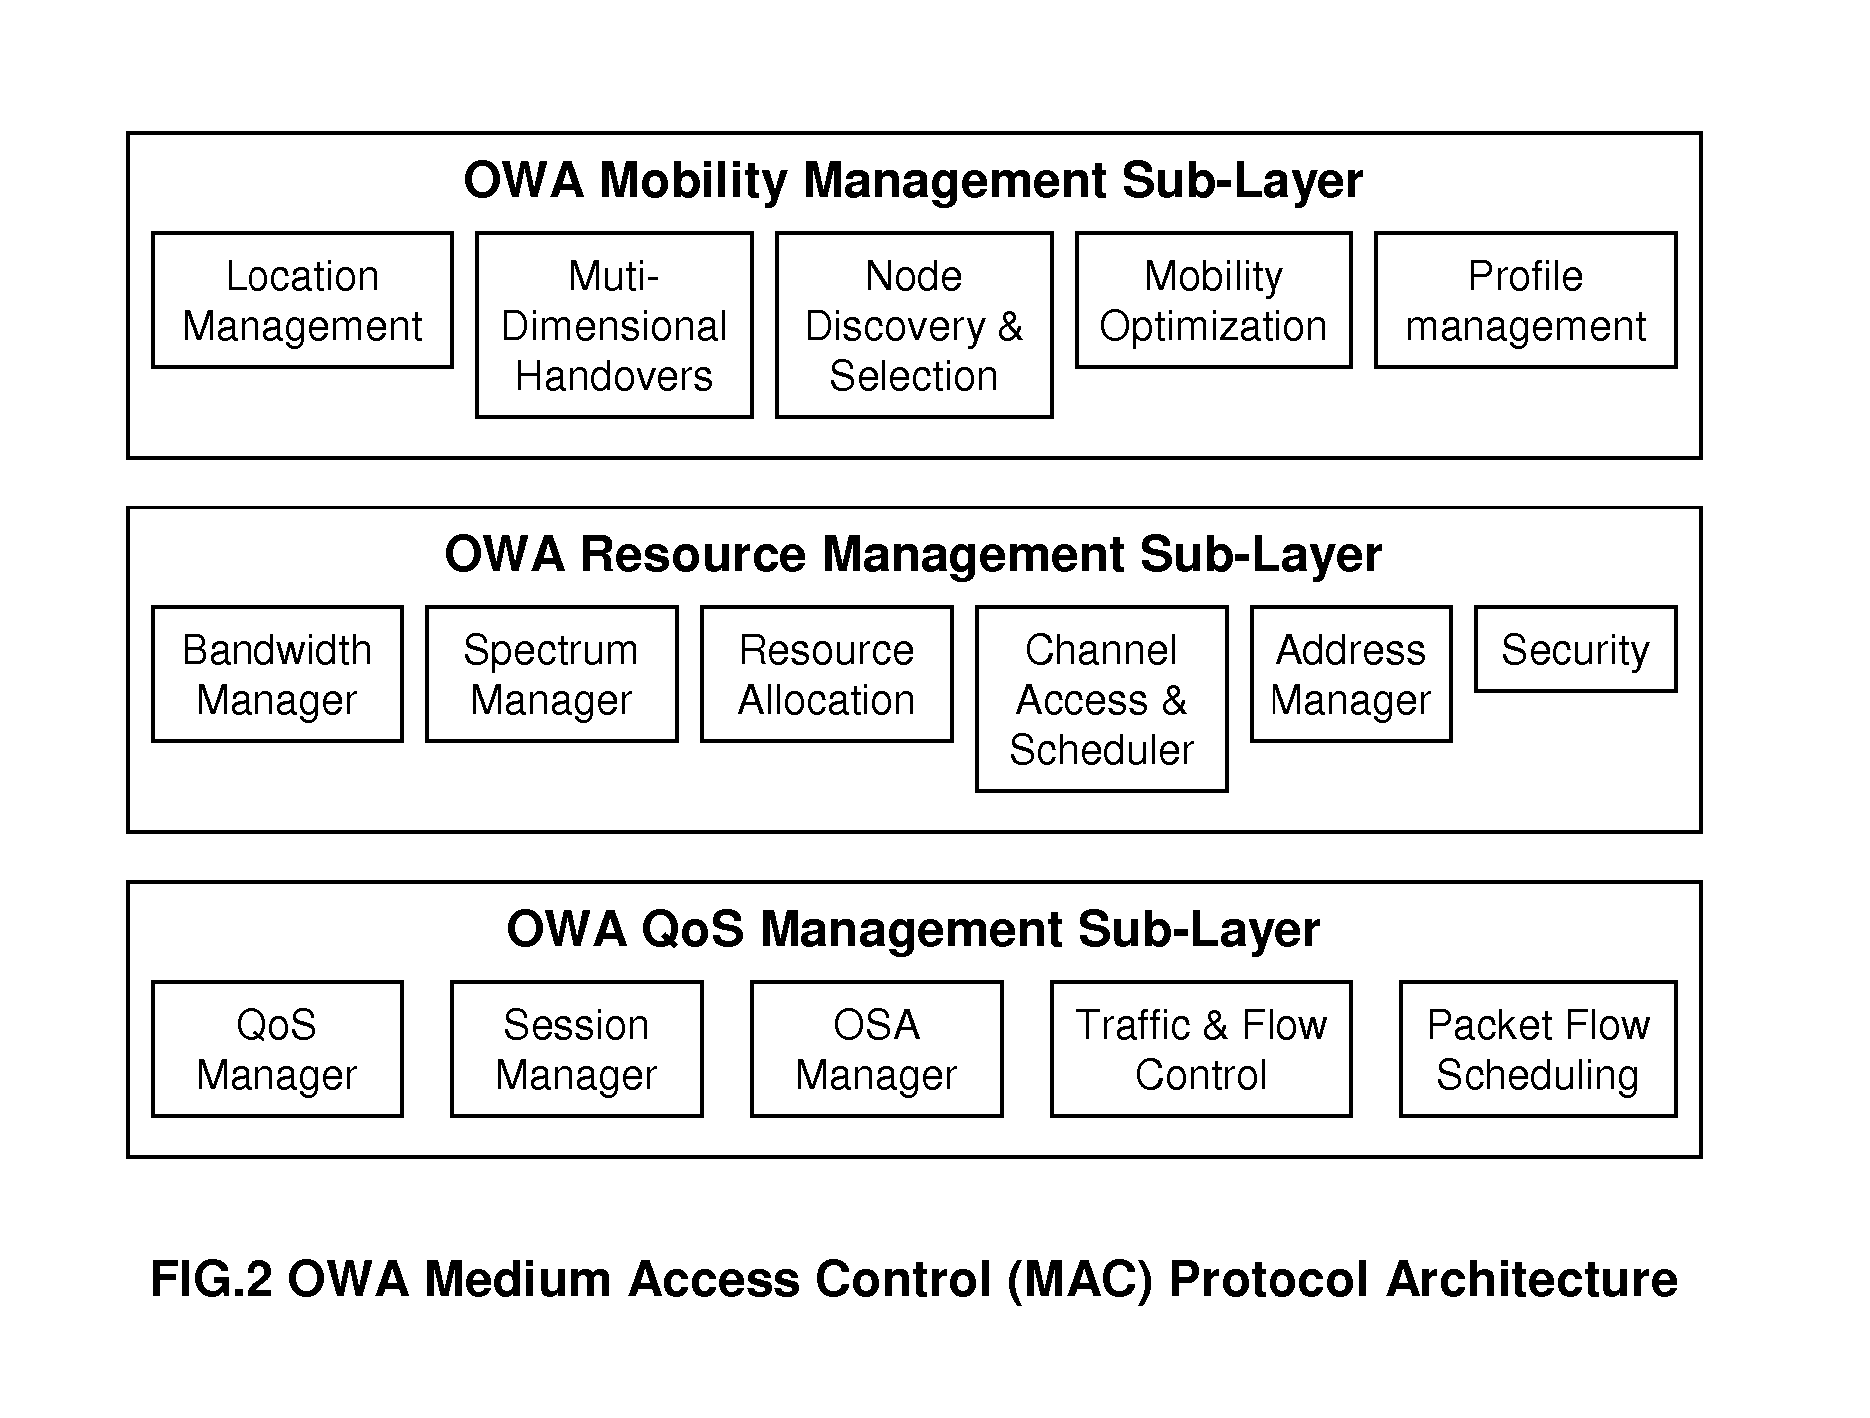 Software Architecture for Future Open Wireless Architecture (OWA) Mobile Terminal